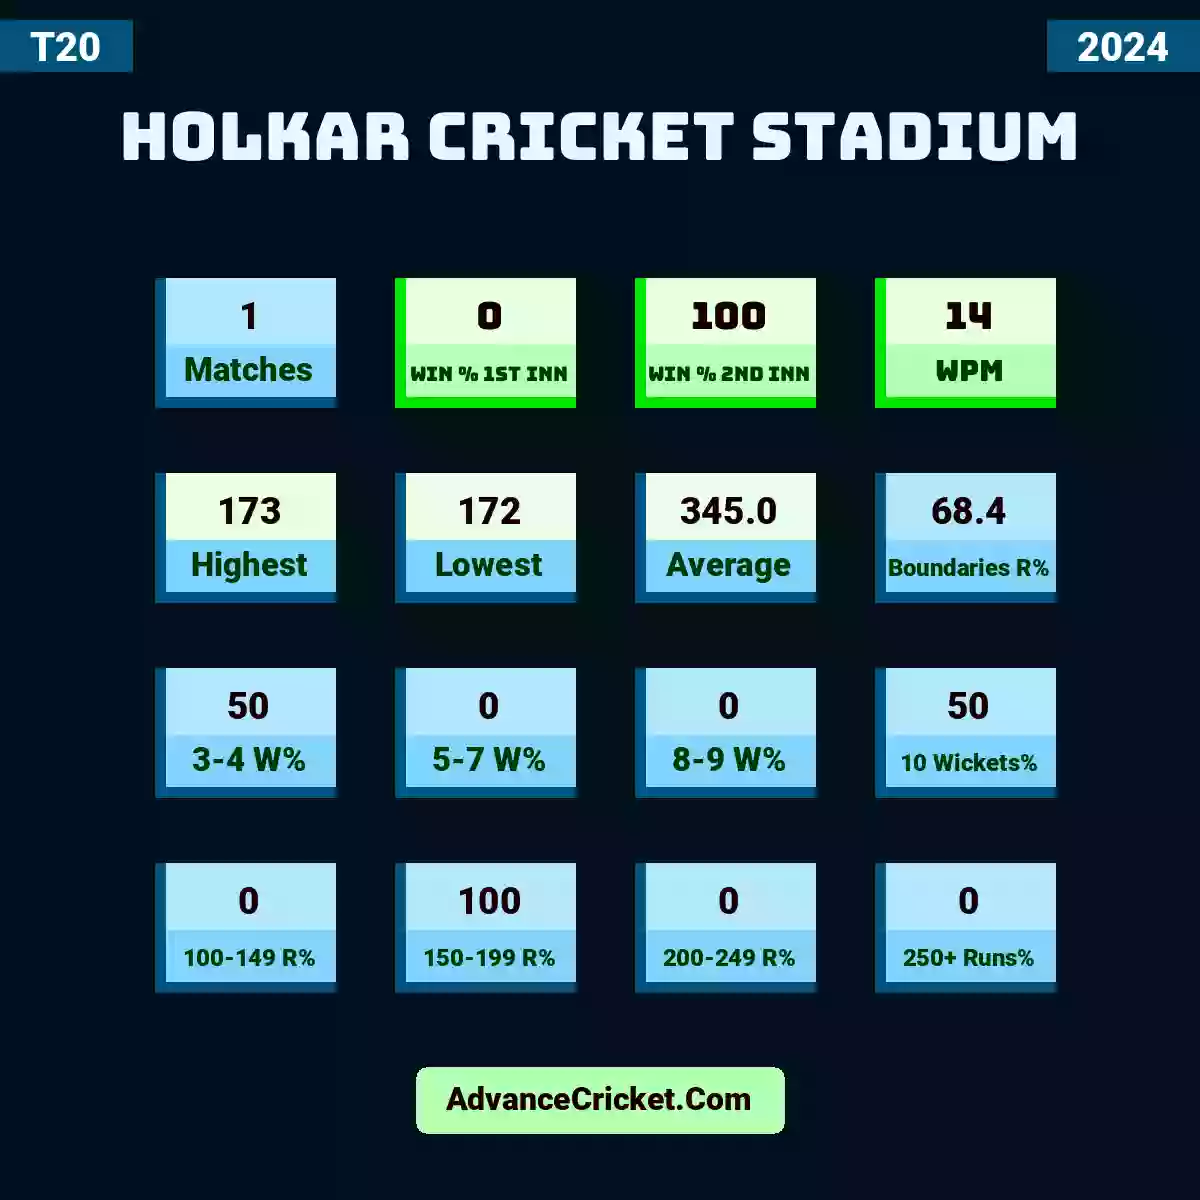 Image showing Holkar Cricket Stadium with Matches: 1, Win % 1st Inn: 0, Win % 2nd Inn: 100, WPM: 14, Highest: 173, Lowest: 172, Average: 345.0, Boundaries R%: 68.4, 3-4 W%: 50, 5-7 W%: 0, 8-9 W%: 0, 10 Wickets%: 50, 100-149 R%: 0, 150-199 R%: 100, 200-249 R%: 0, 250+ Runs%: 0.